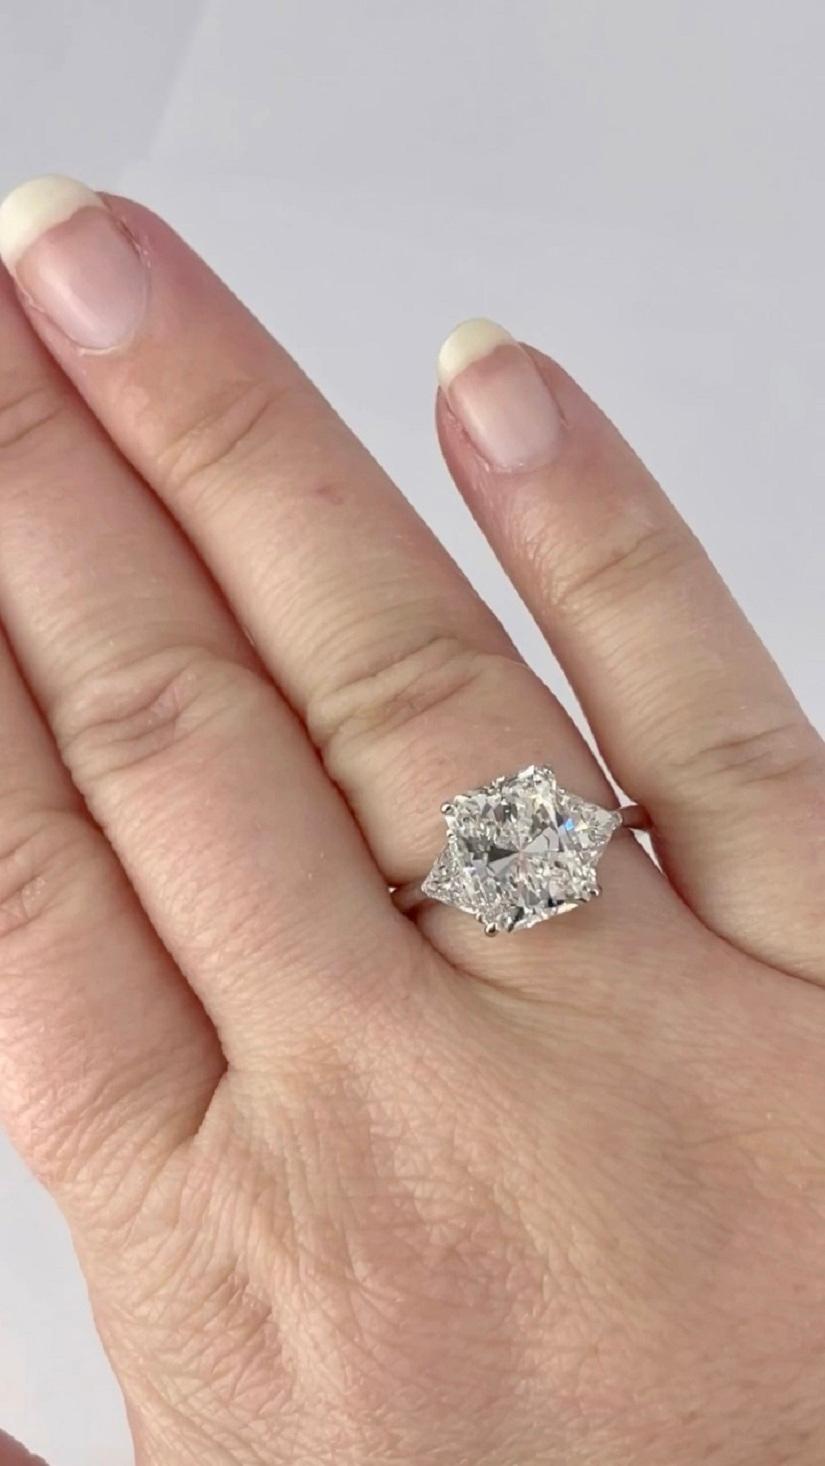 Women's J. Birnbach 3.21 carat Radiant Cut Diamond Three Stone Ring with Trillions